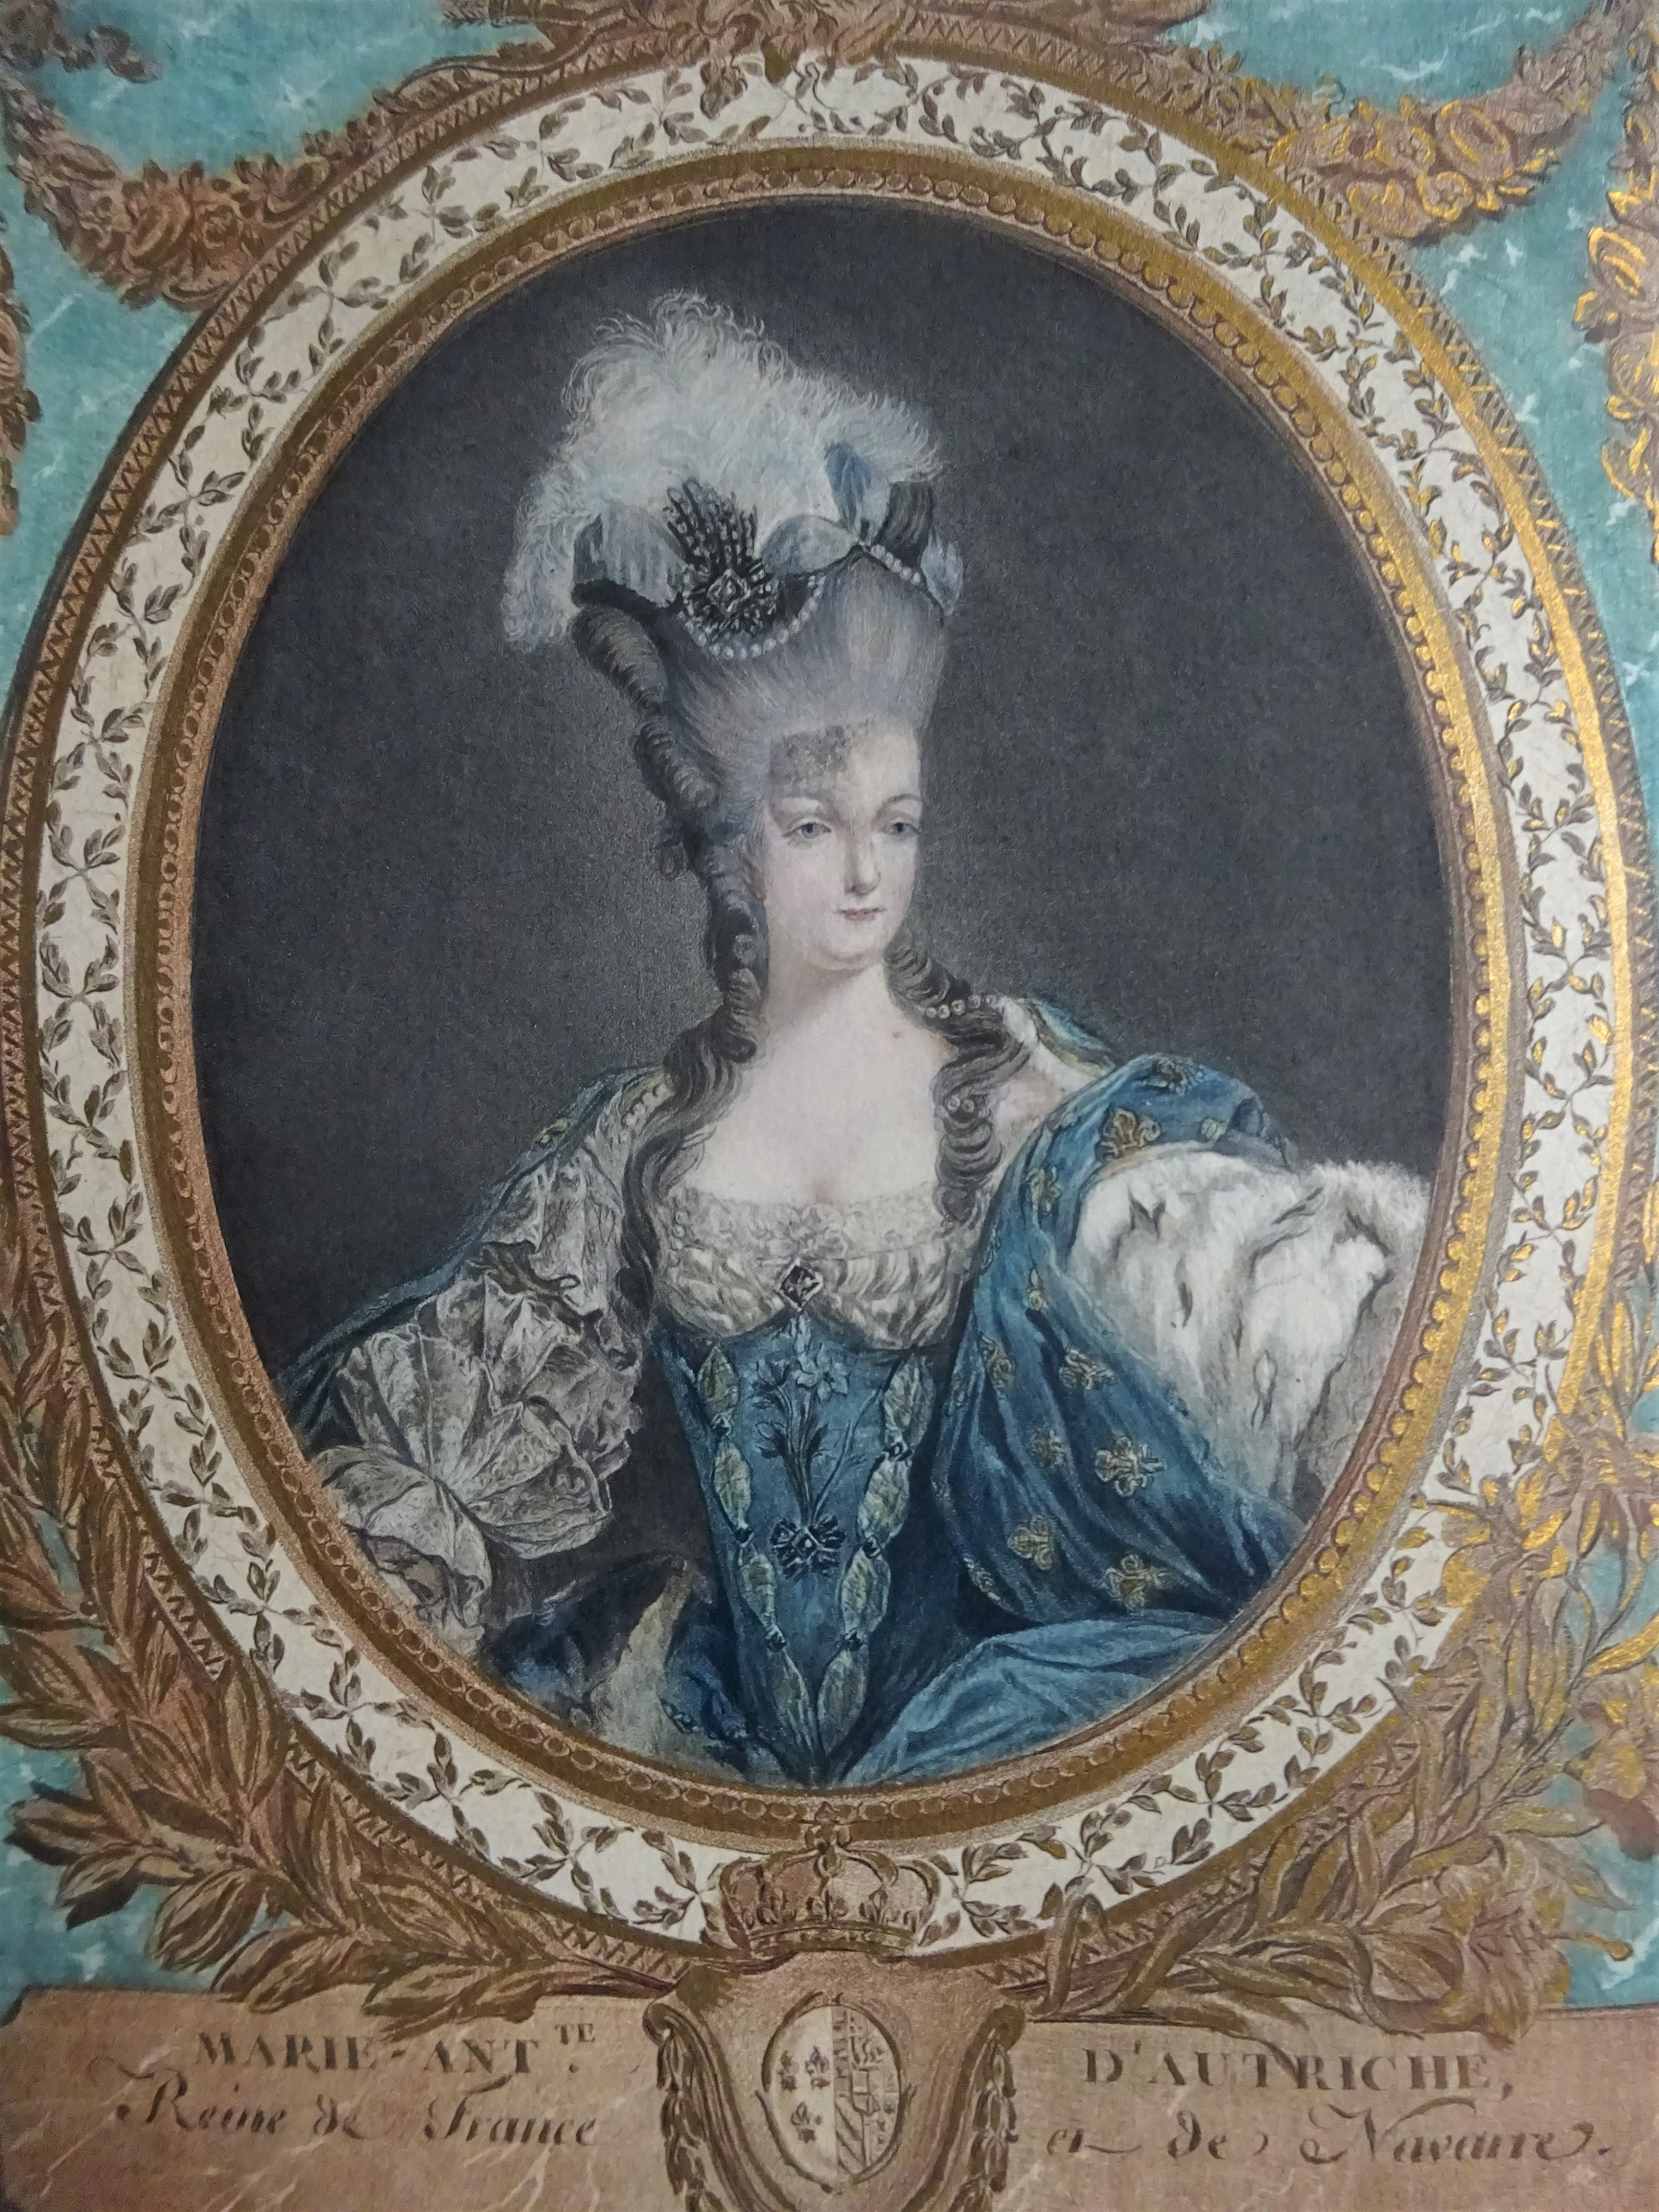 La Reine Marie-Antoinette